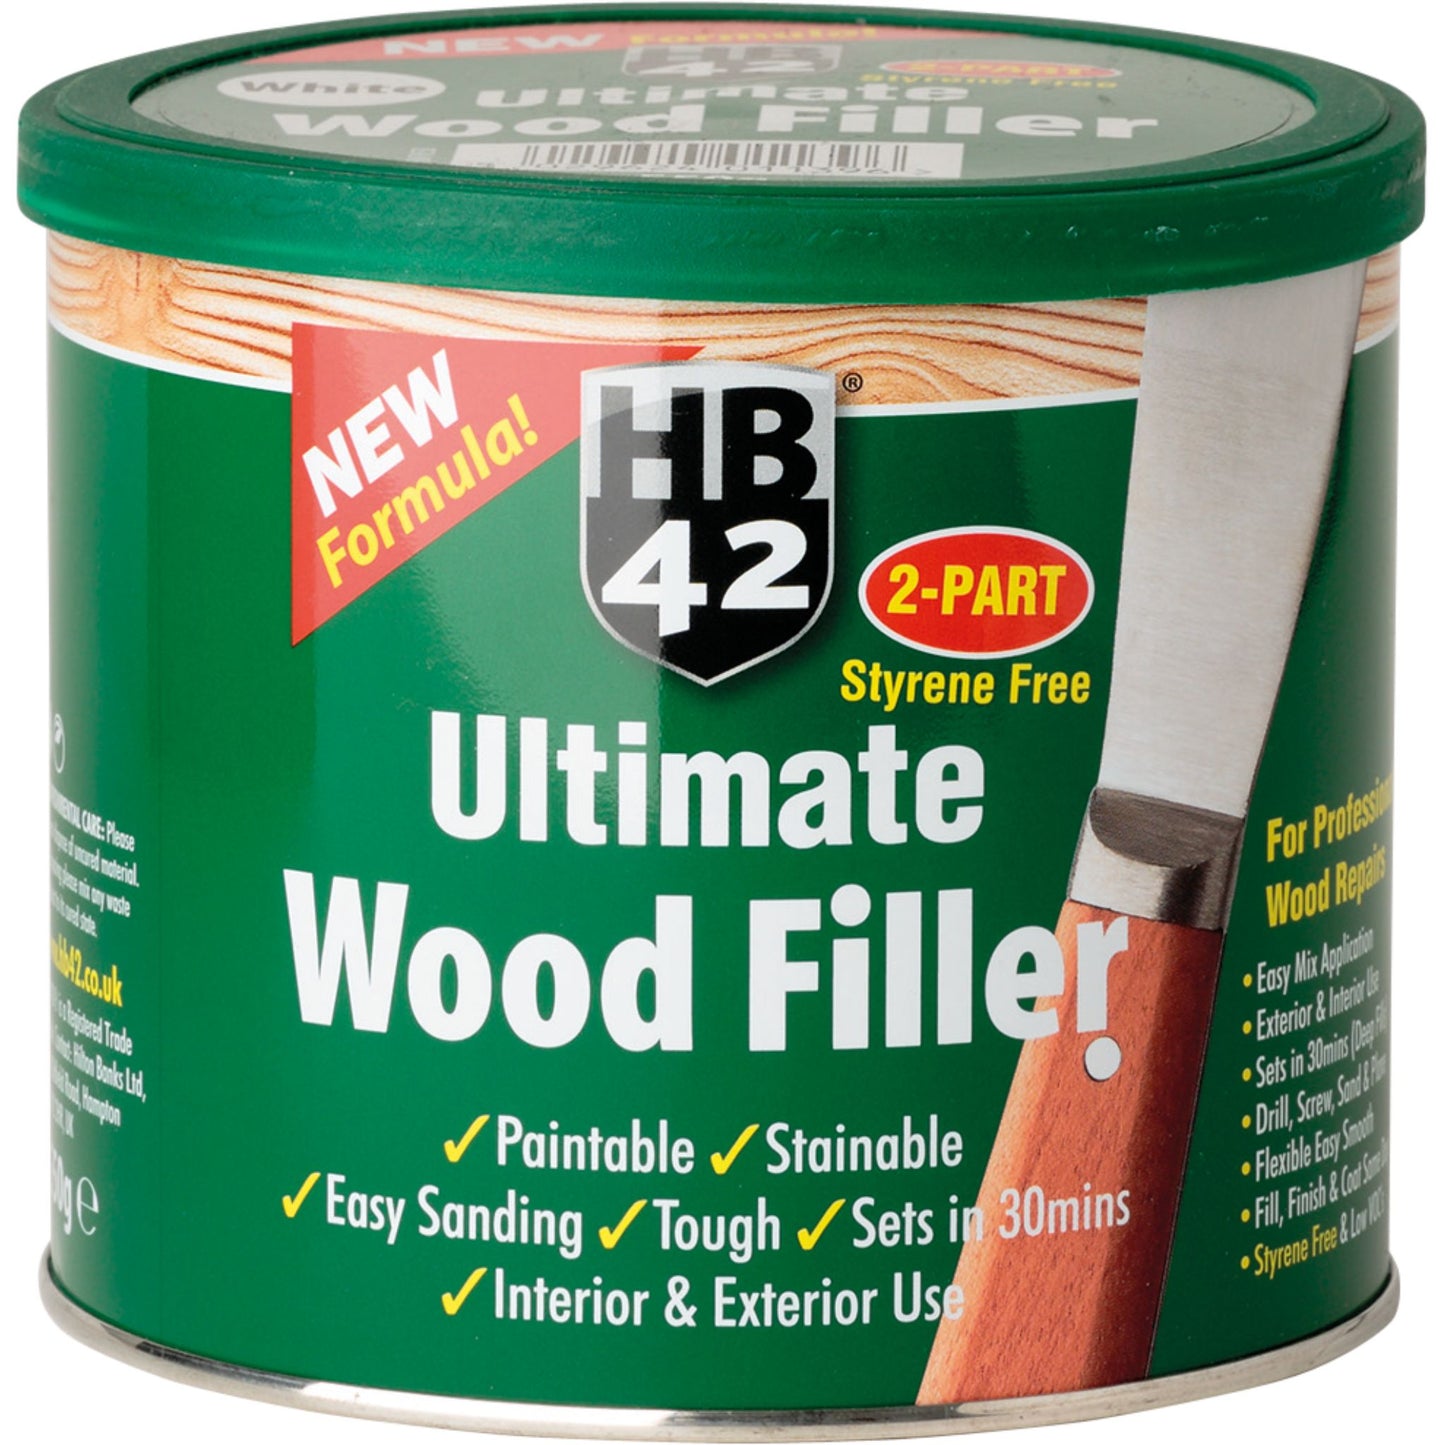 HB42 Ultimate White Wood Filler 550g